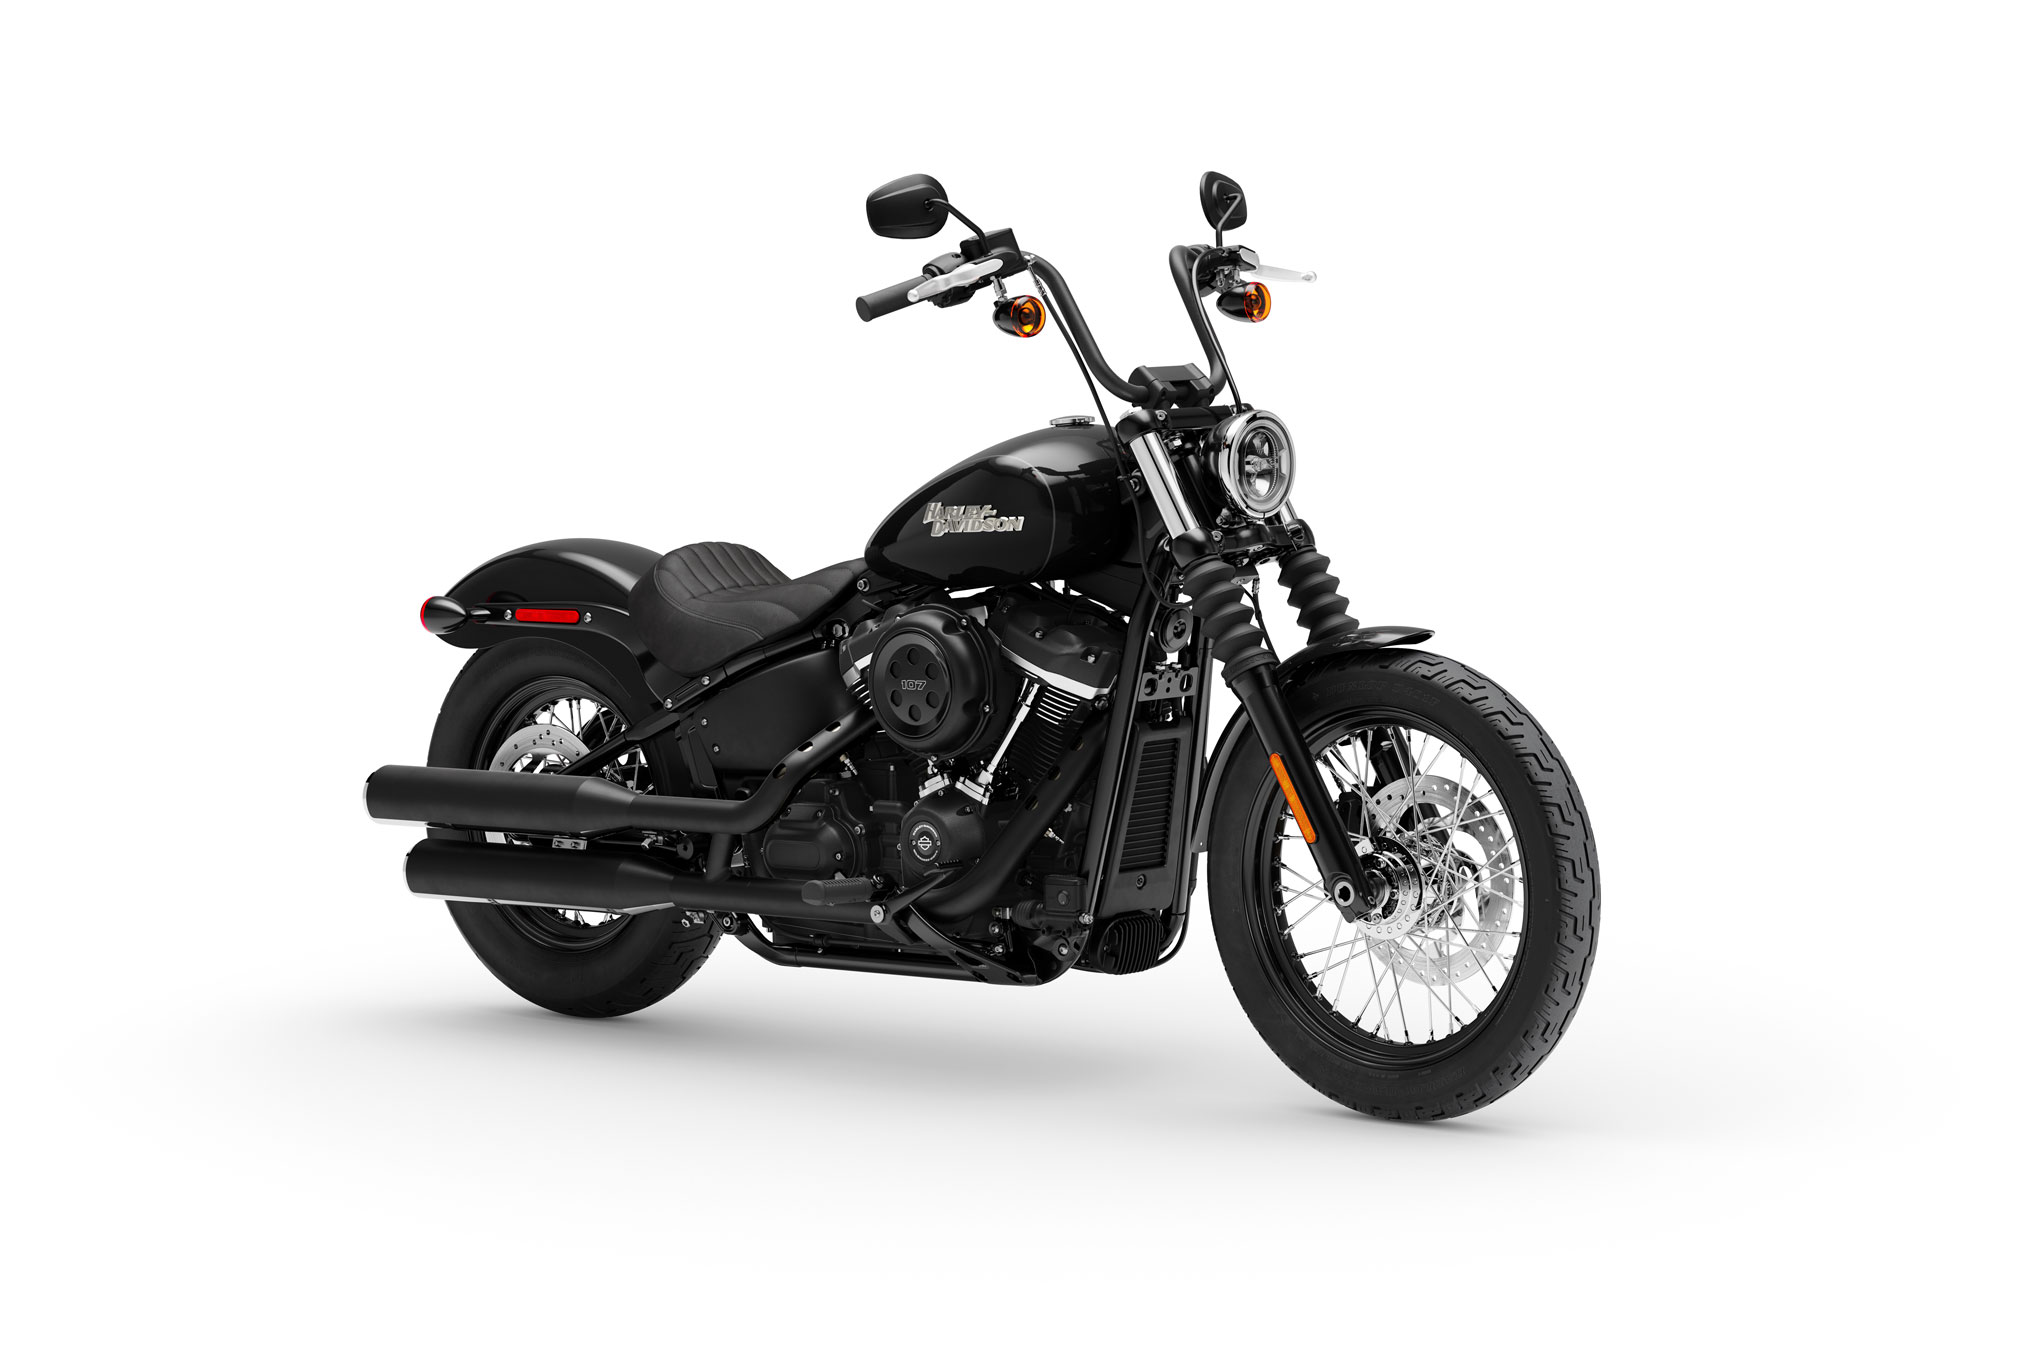 2020 Harley Davidson Street Bob Guide Total Motorcycle